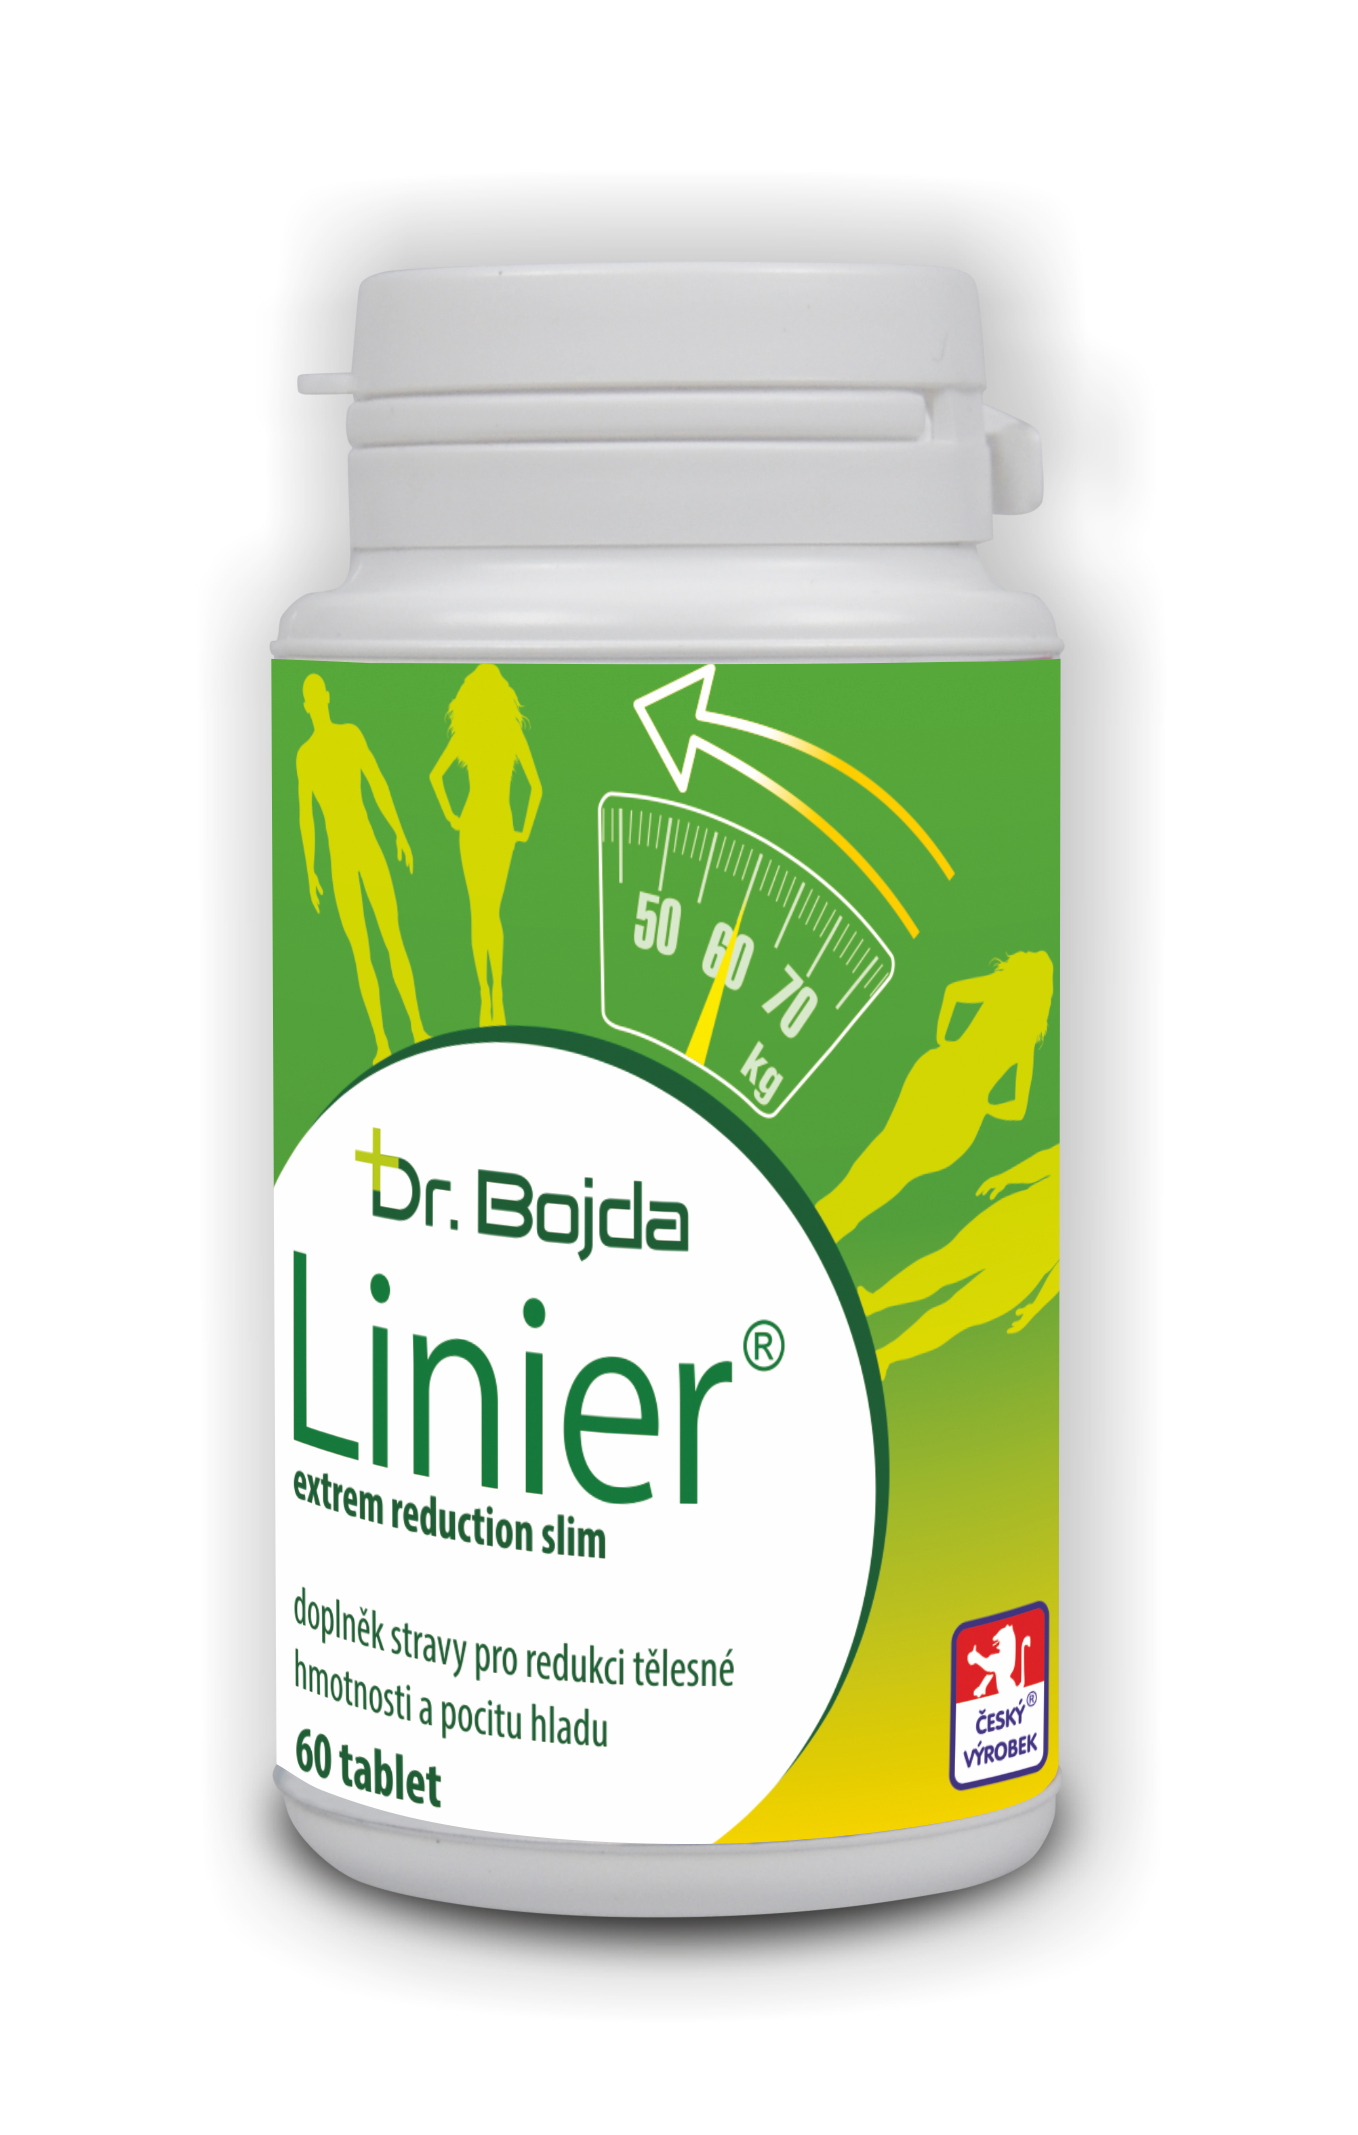 Dr. Bojda Linier extreme reduction slim 60 tbl.